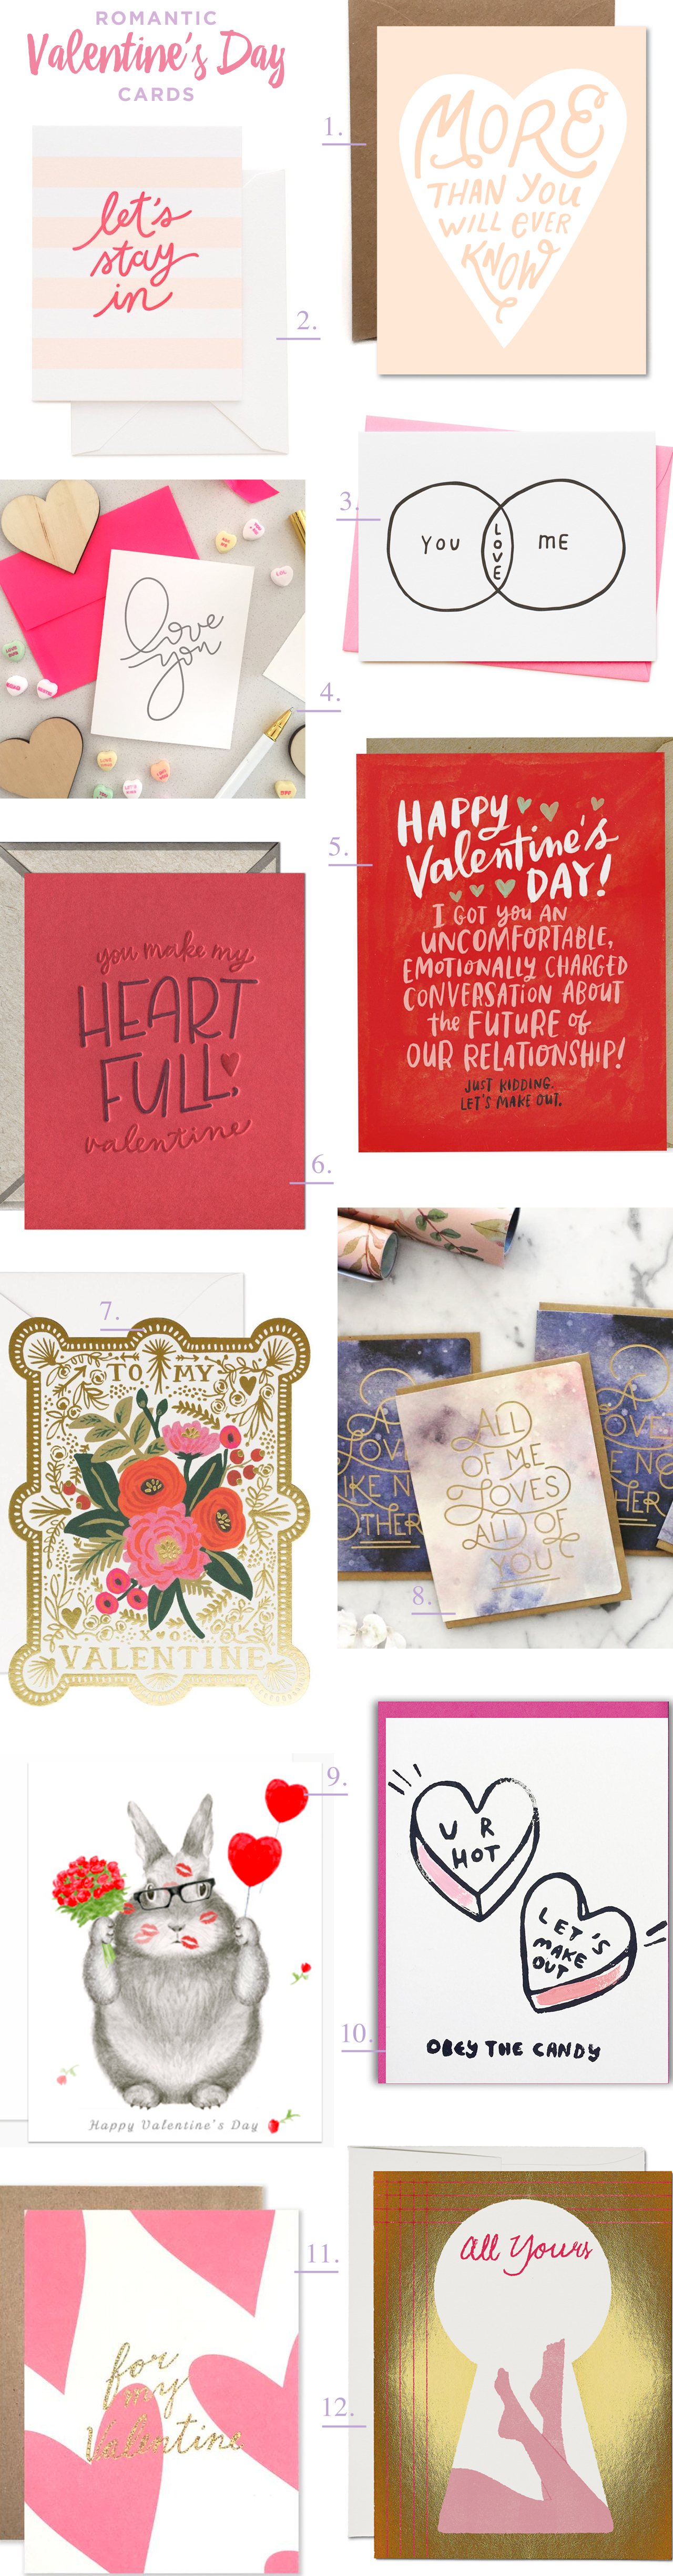 Romantic Valentine's Day Cards